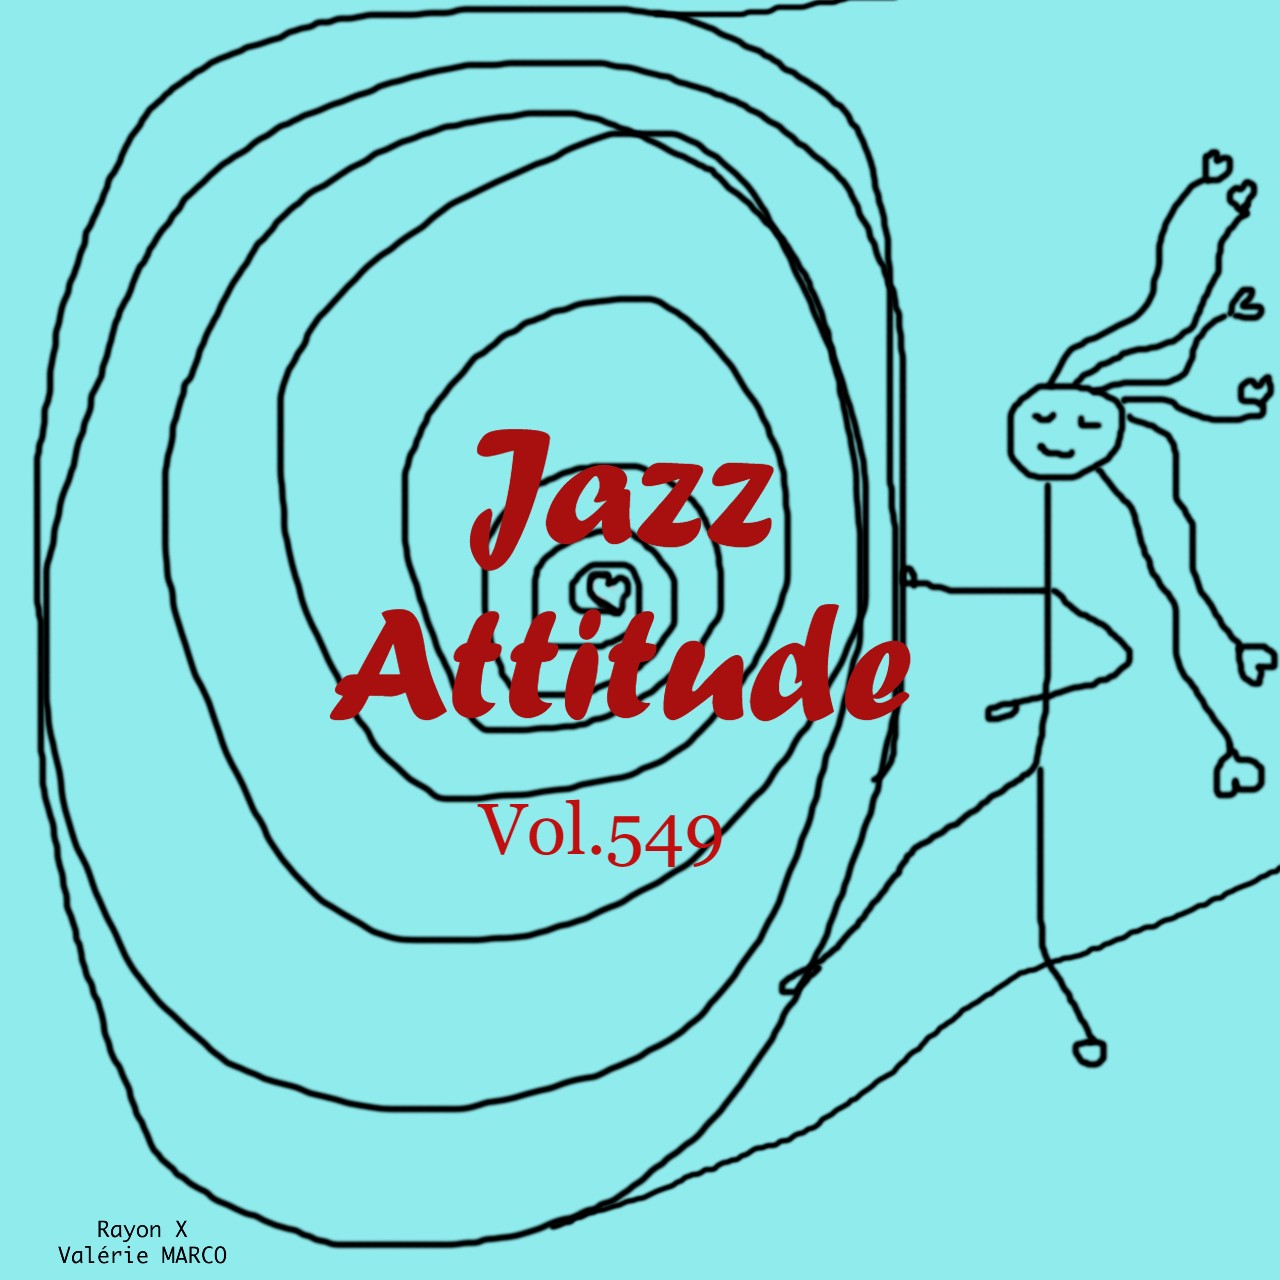 Jazz Attitude Vol. 549

